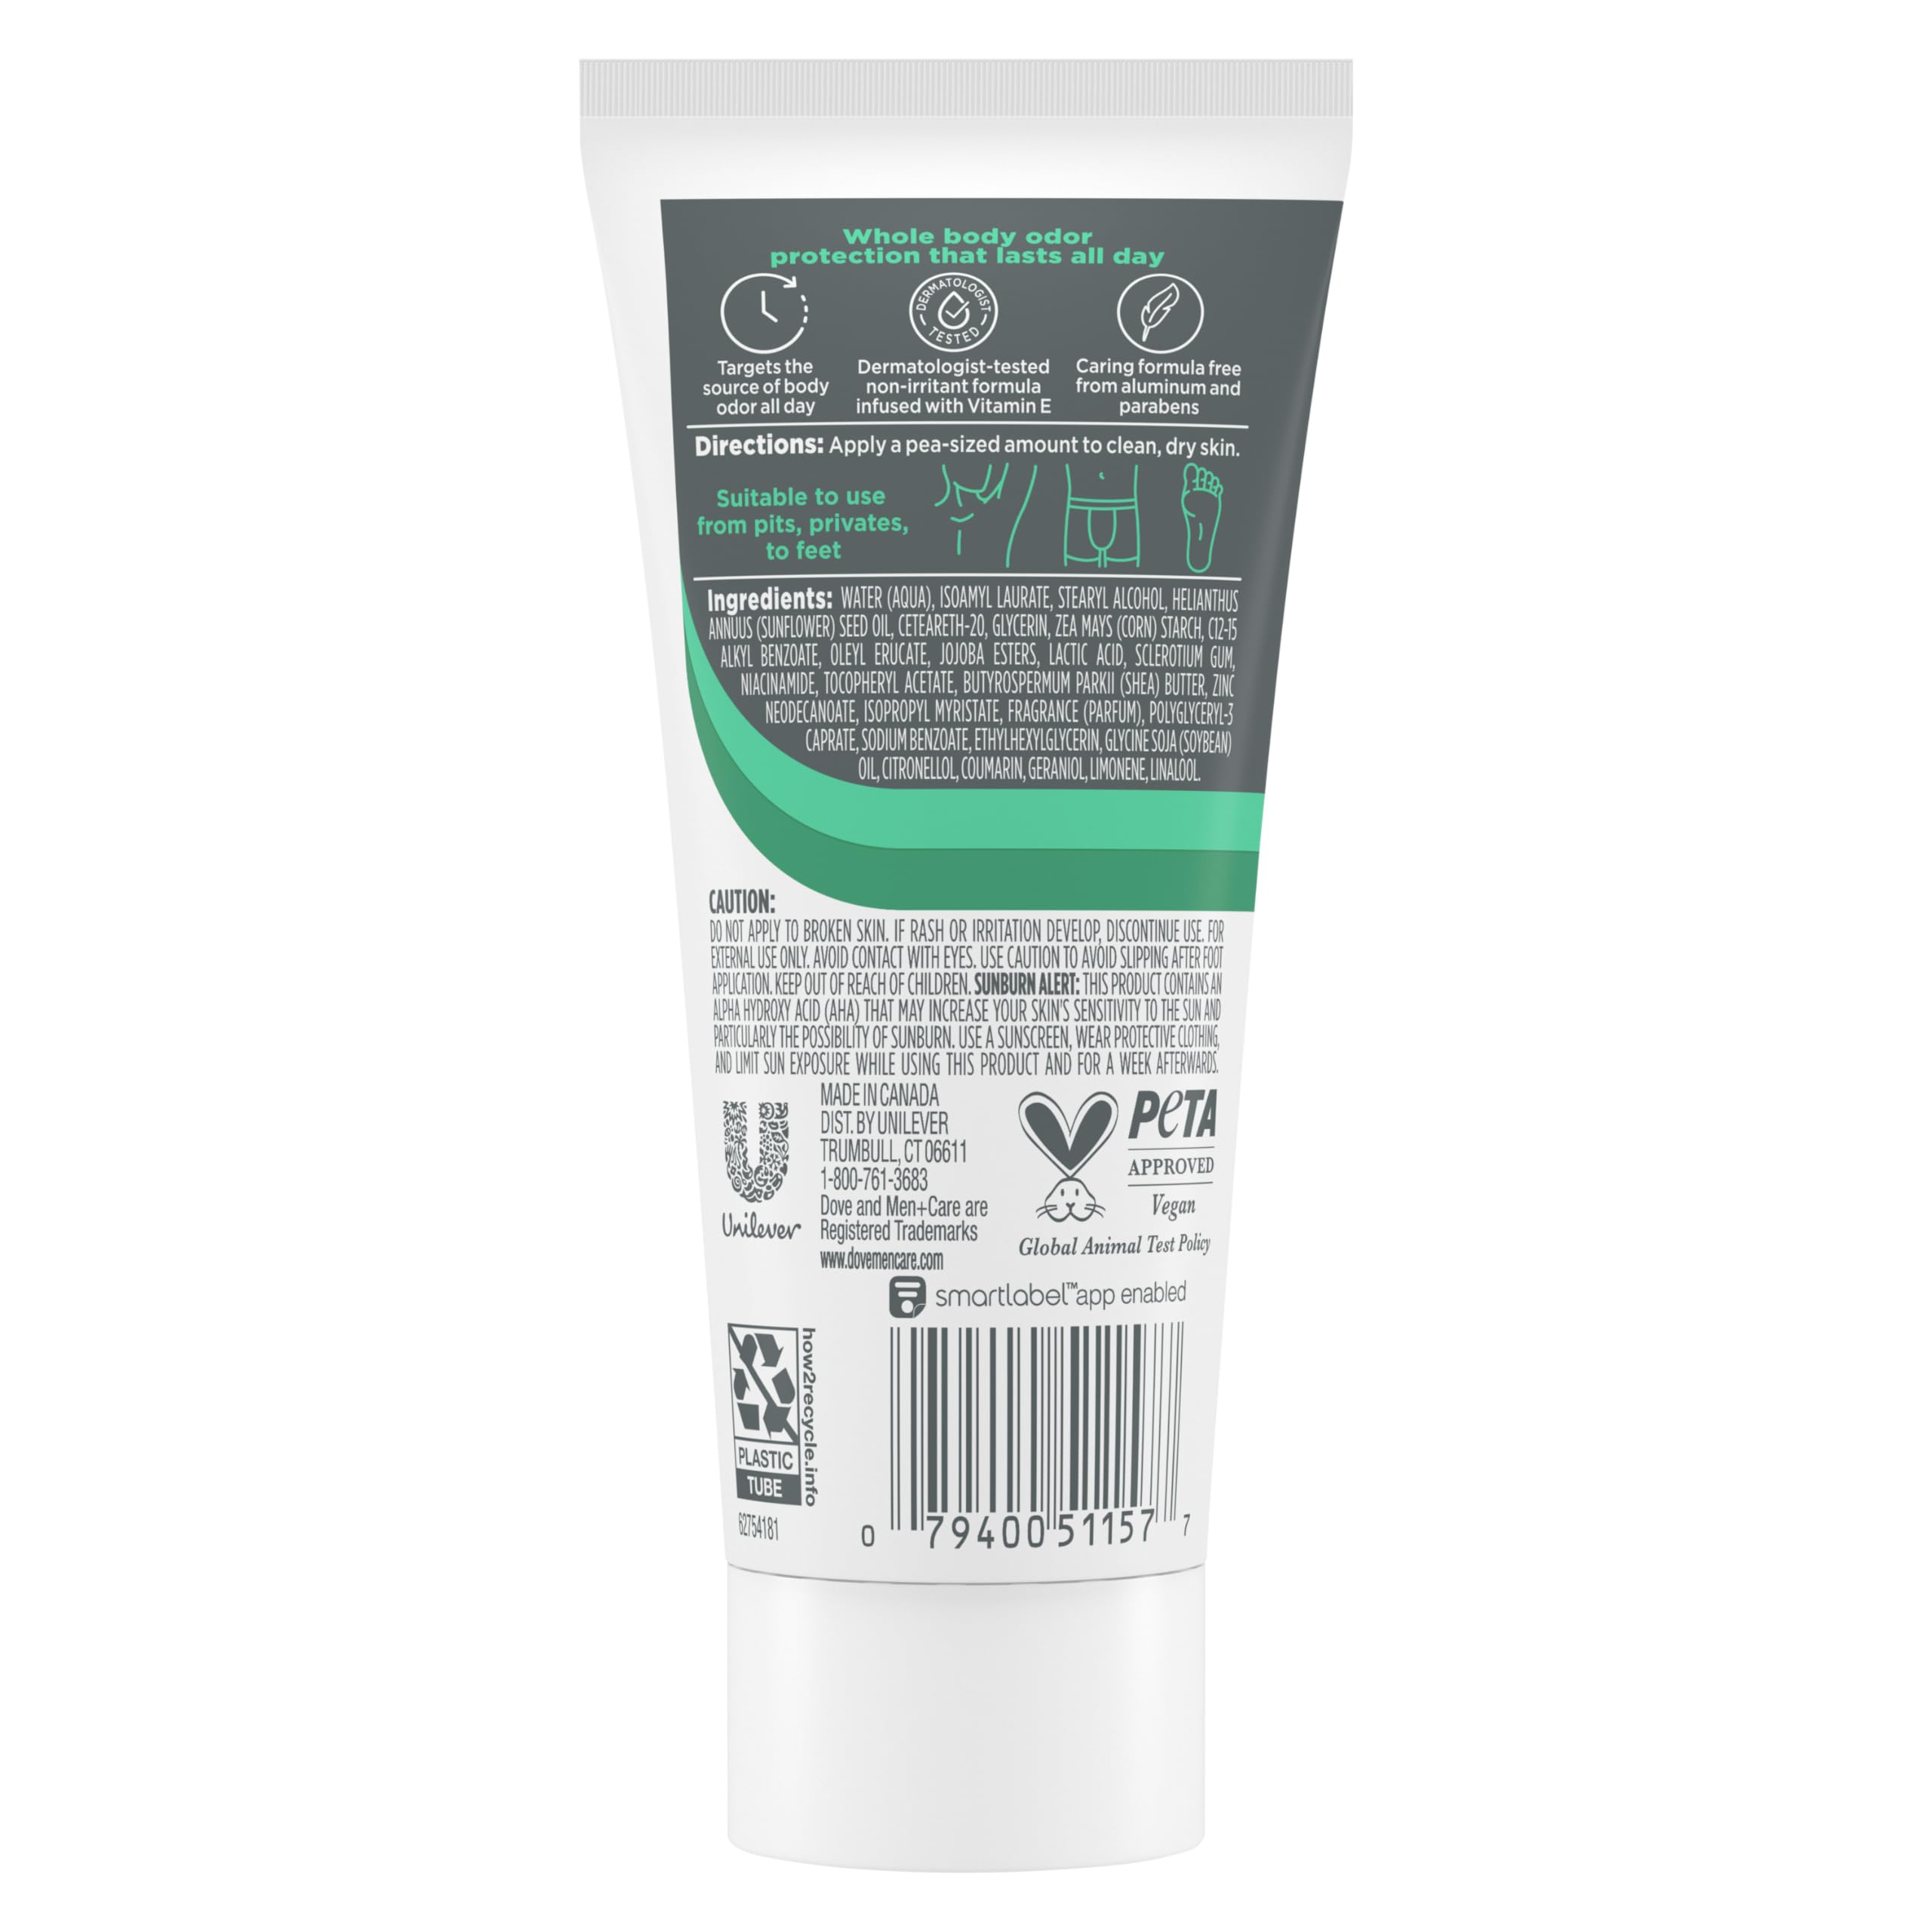 Dove Men+Care Whole Body Deo Aluminum-Free Deodorant Cream Aloe + Bamboo Suitable from Pits, Privates, to Feet 2.5 fl oz